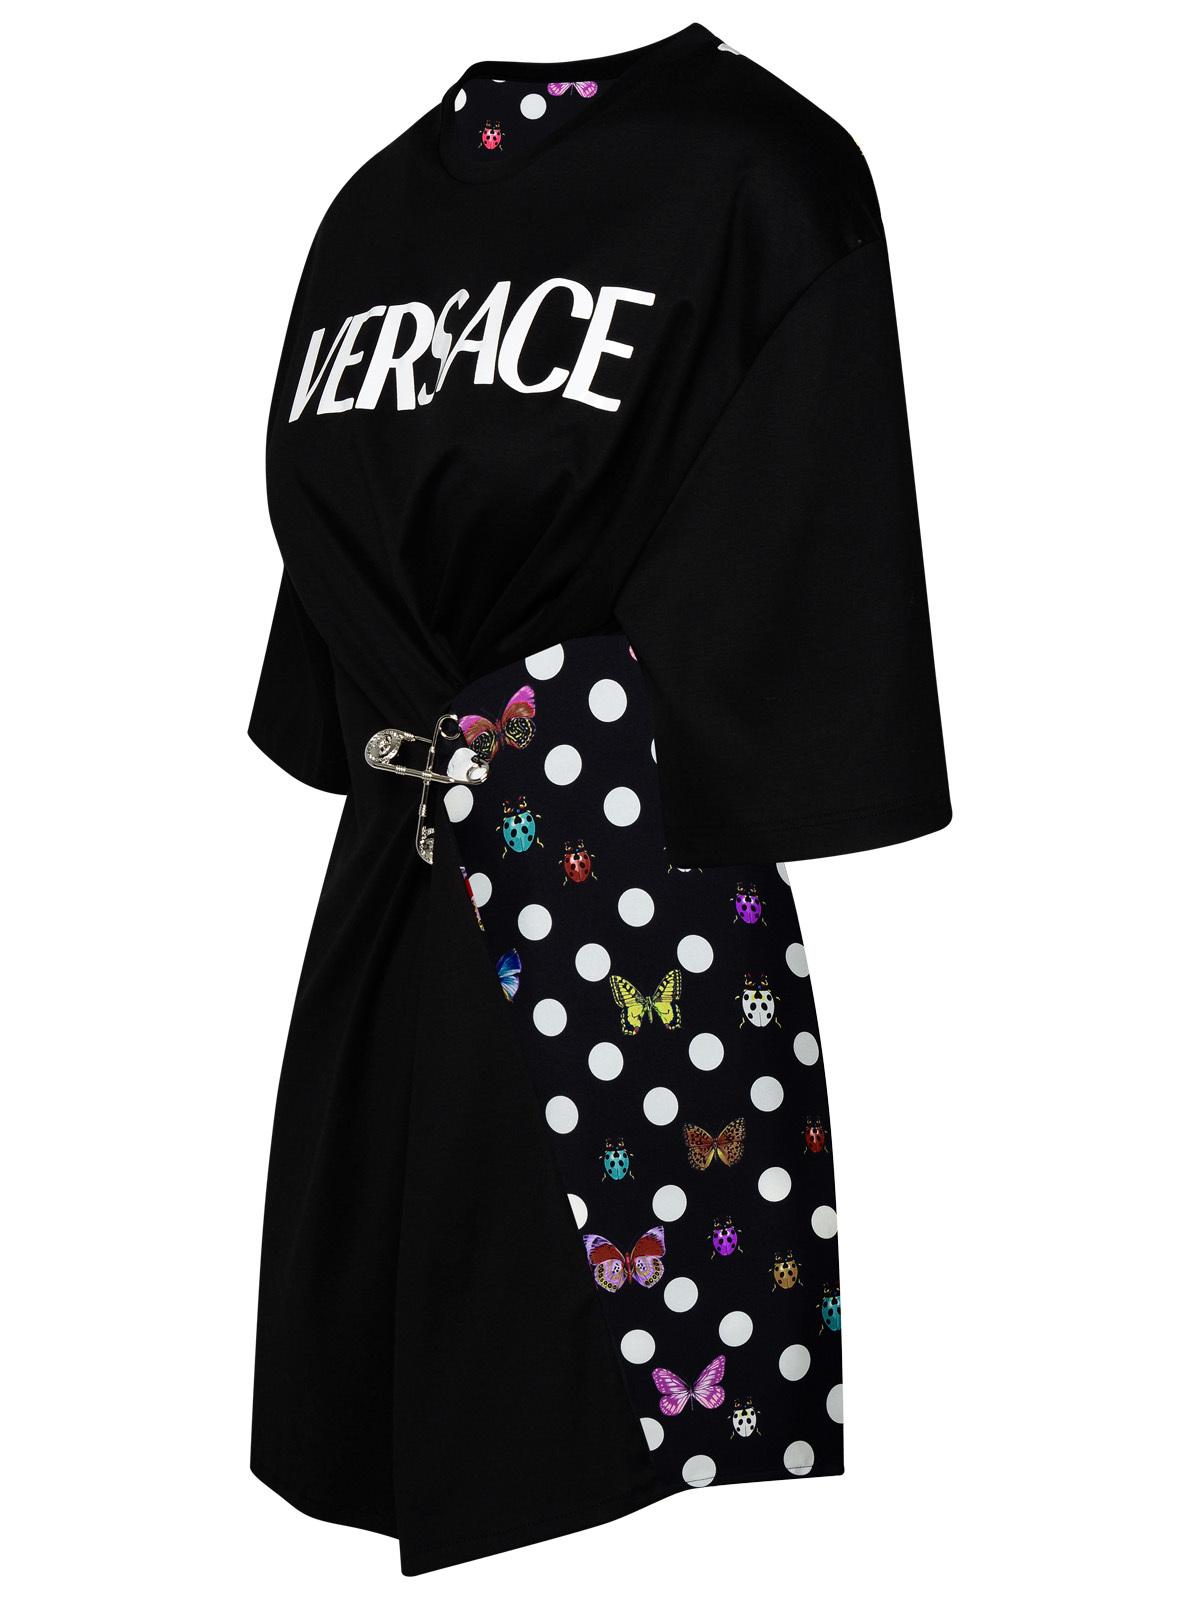 Versace Black Cotton Blend T-Shirt Woman